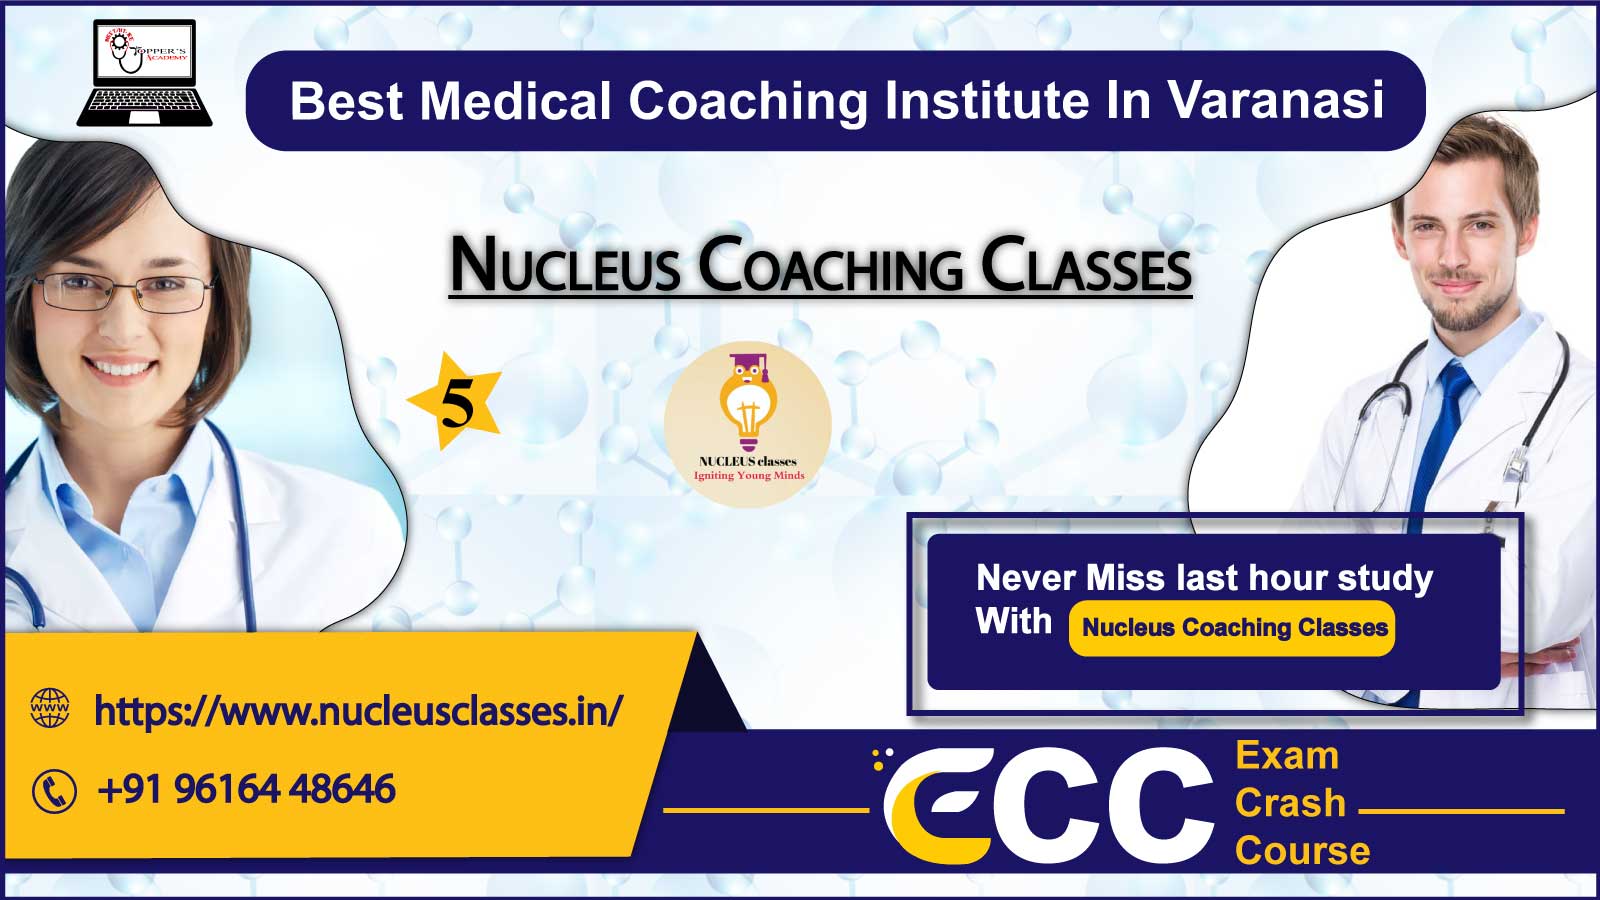 Nucleus NEET Coaching in Varanasi